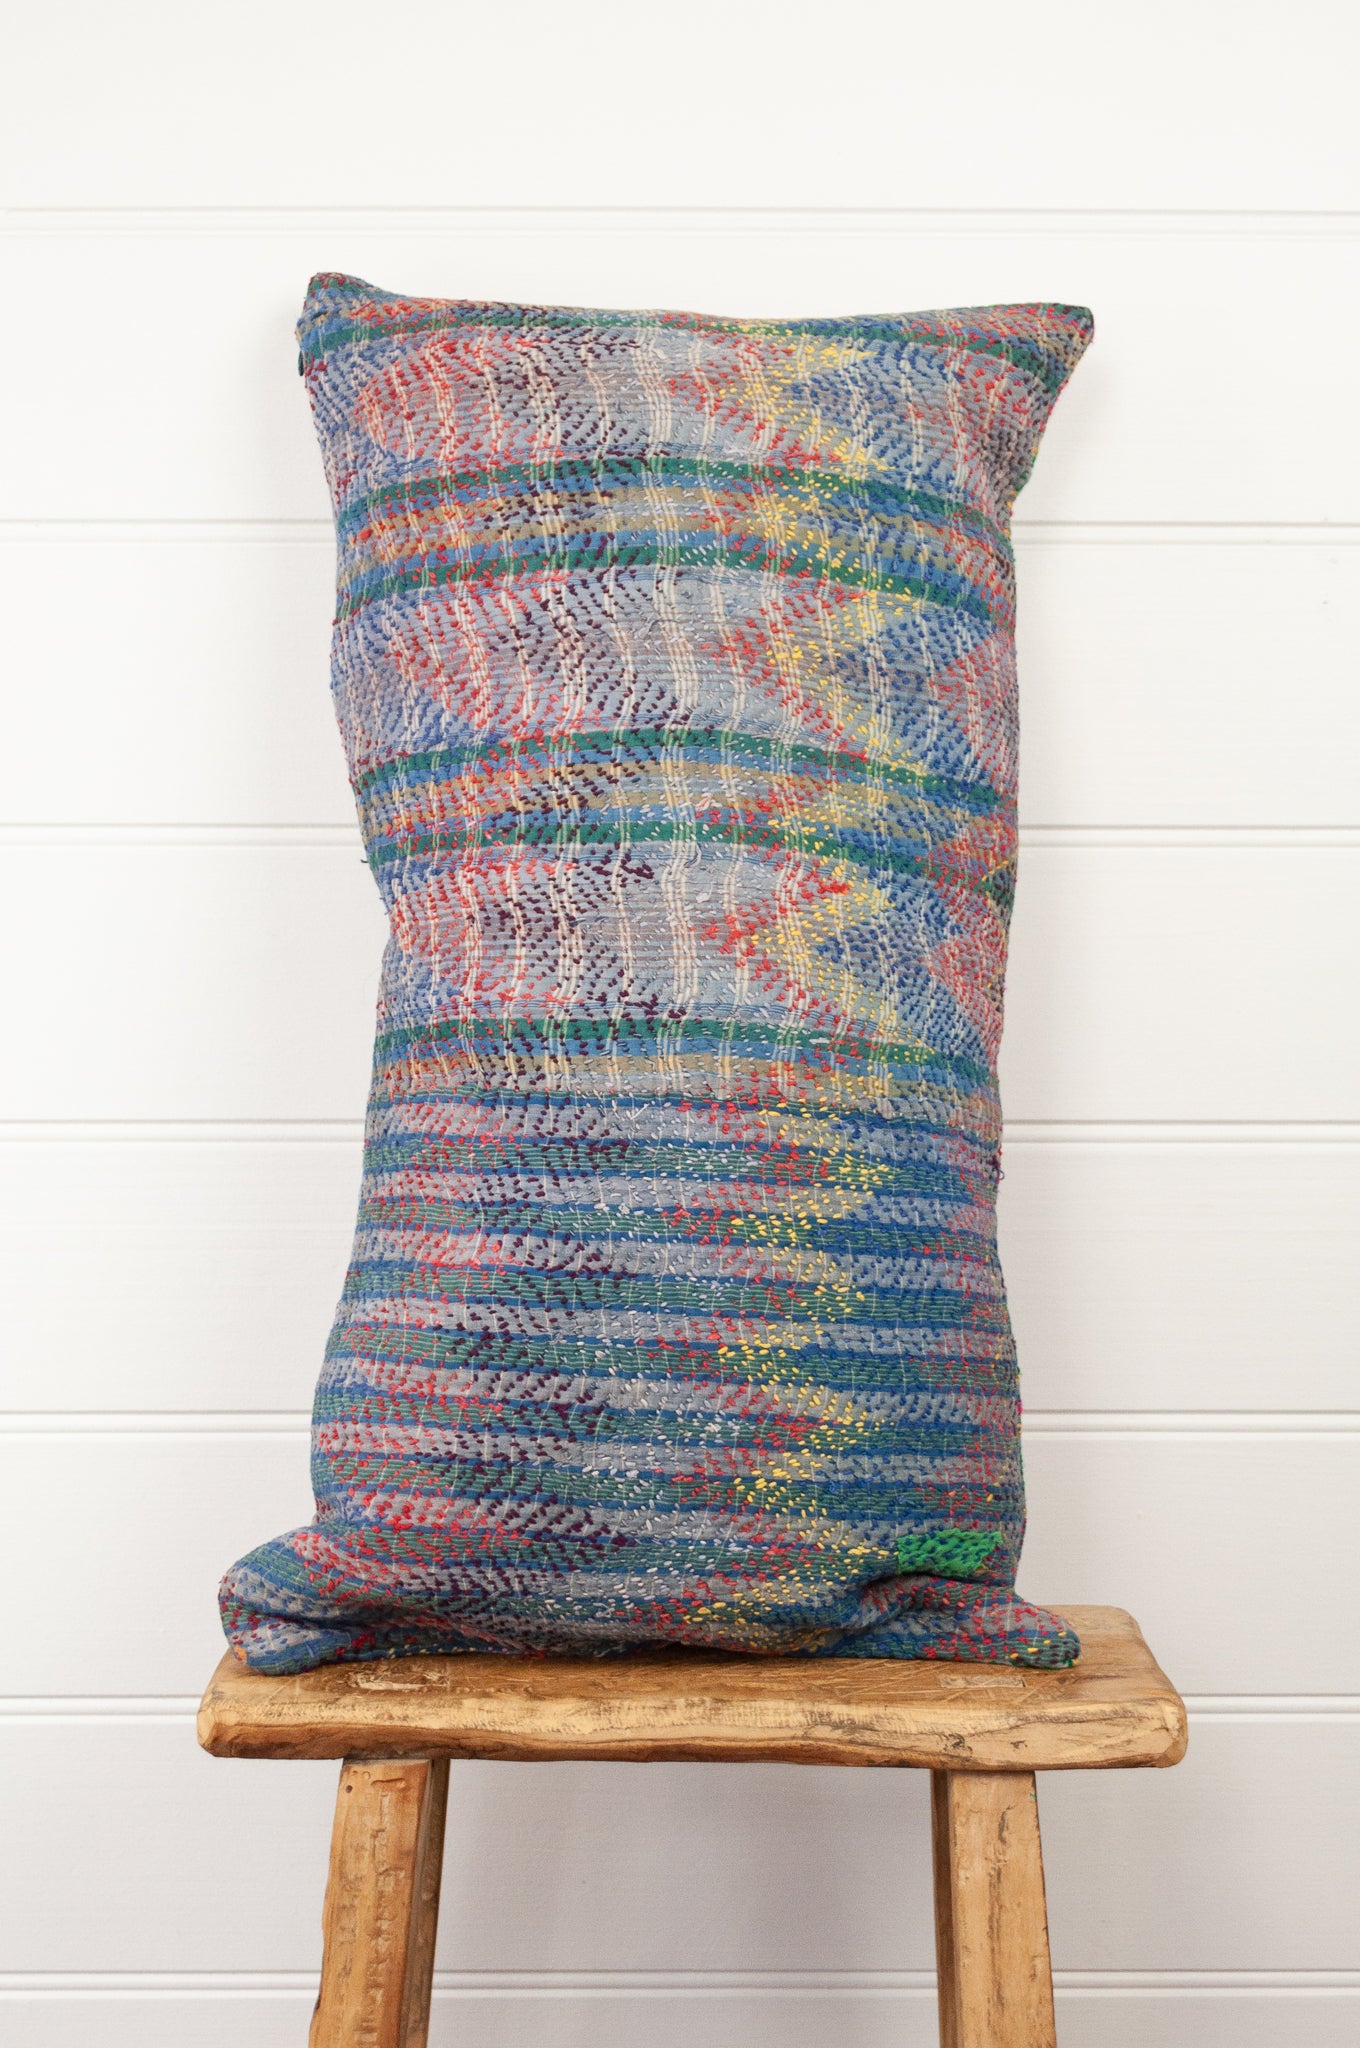 Lohori kantha stitch quilt cushion cover in multi coloured stitching on stripe background.